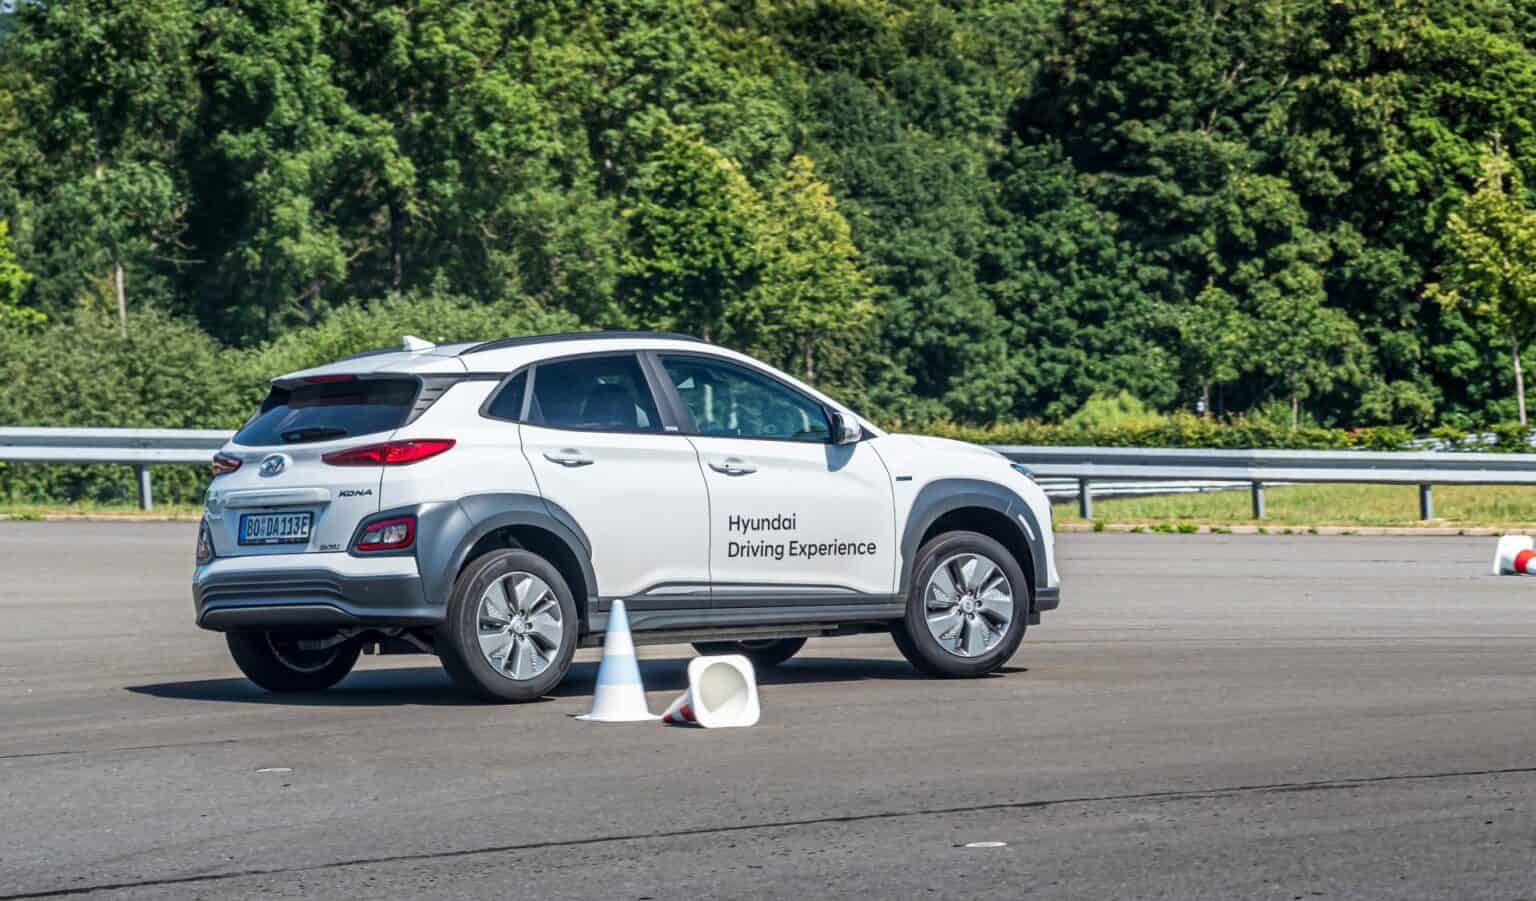 "Hyundai Driving Experience“: Grenz-Erfahrung mit der E-Mobilität